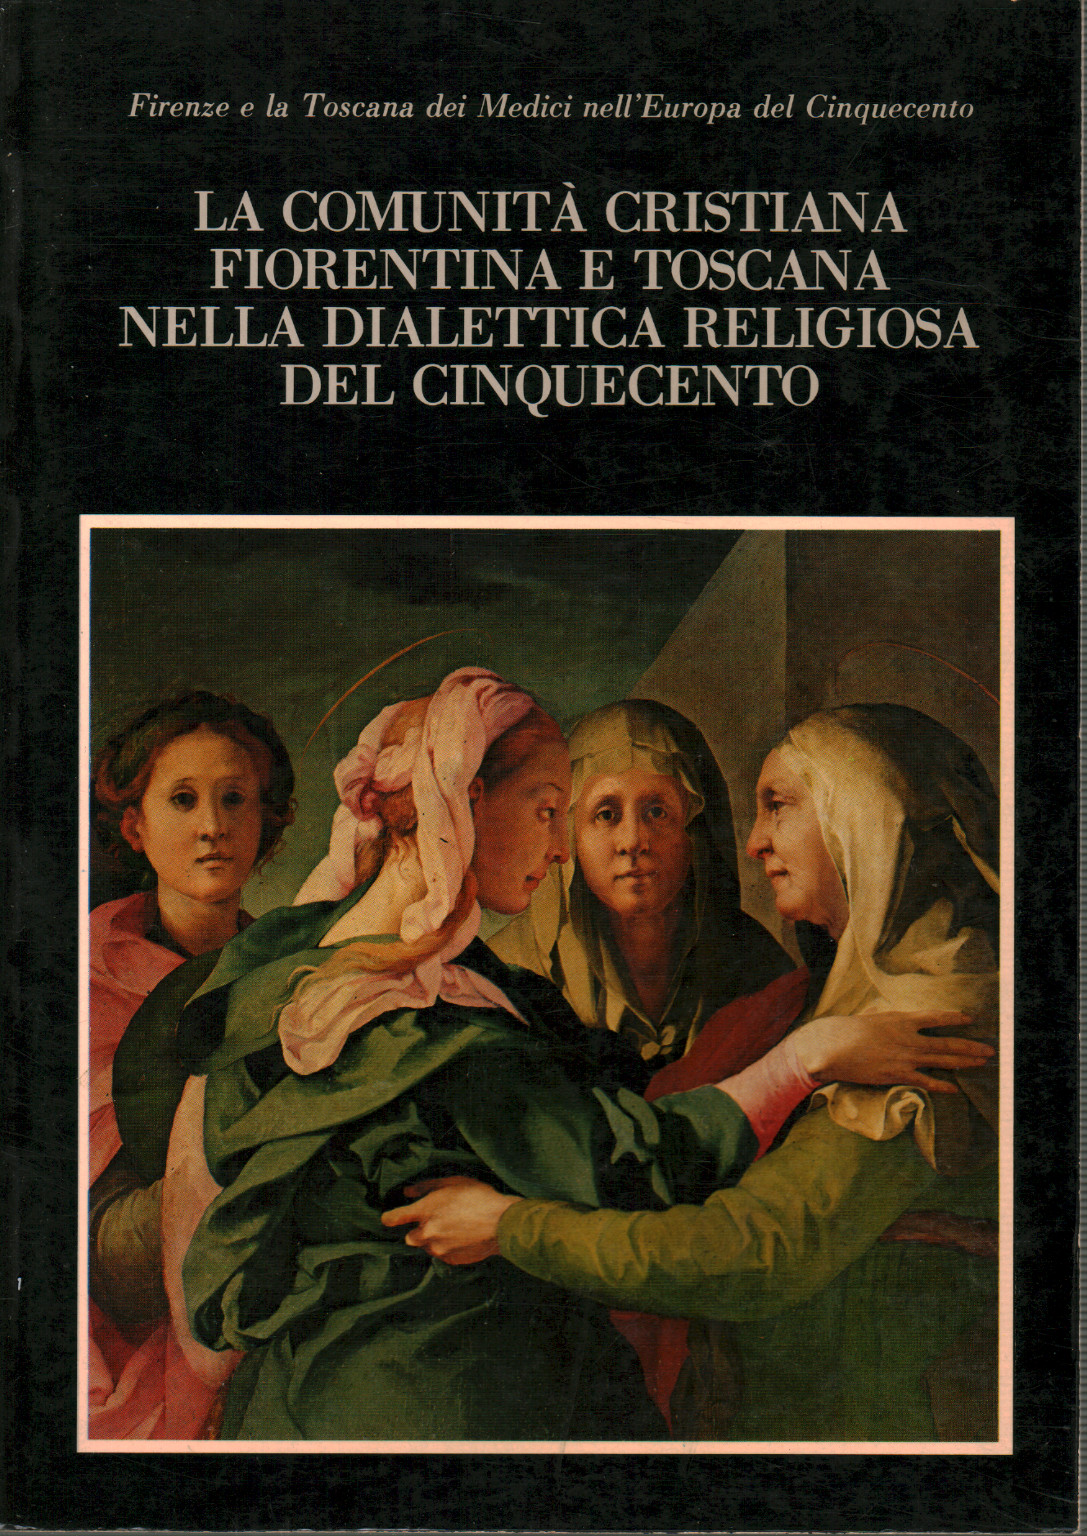 The Florentine Christian community e